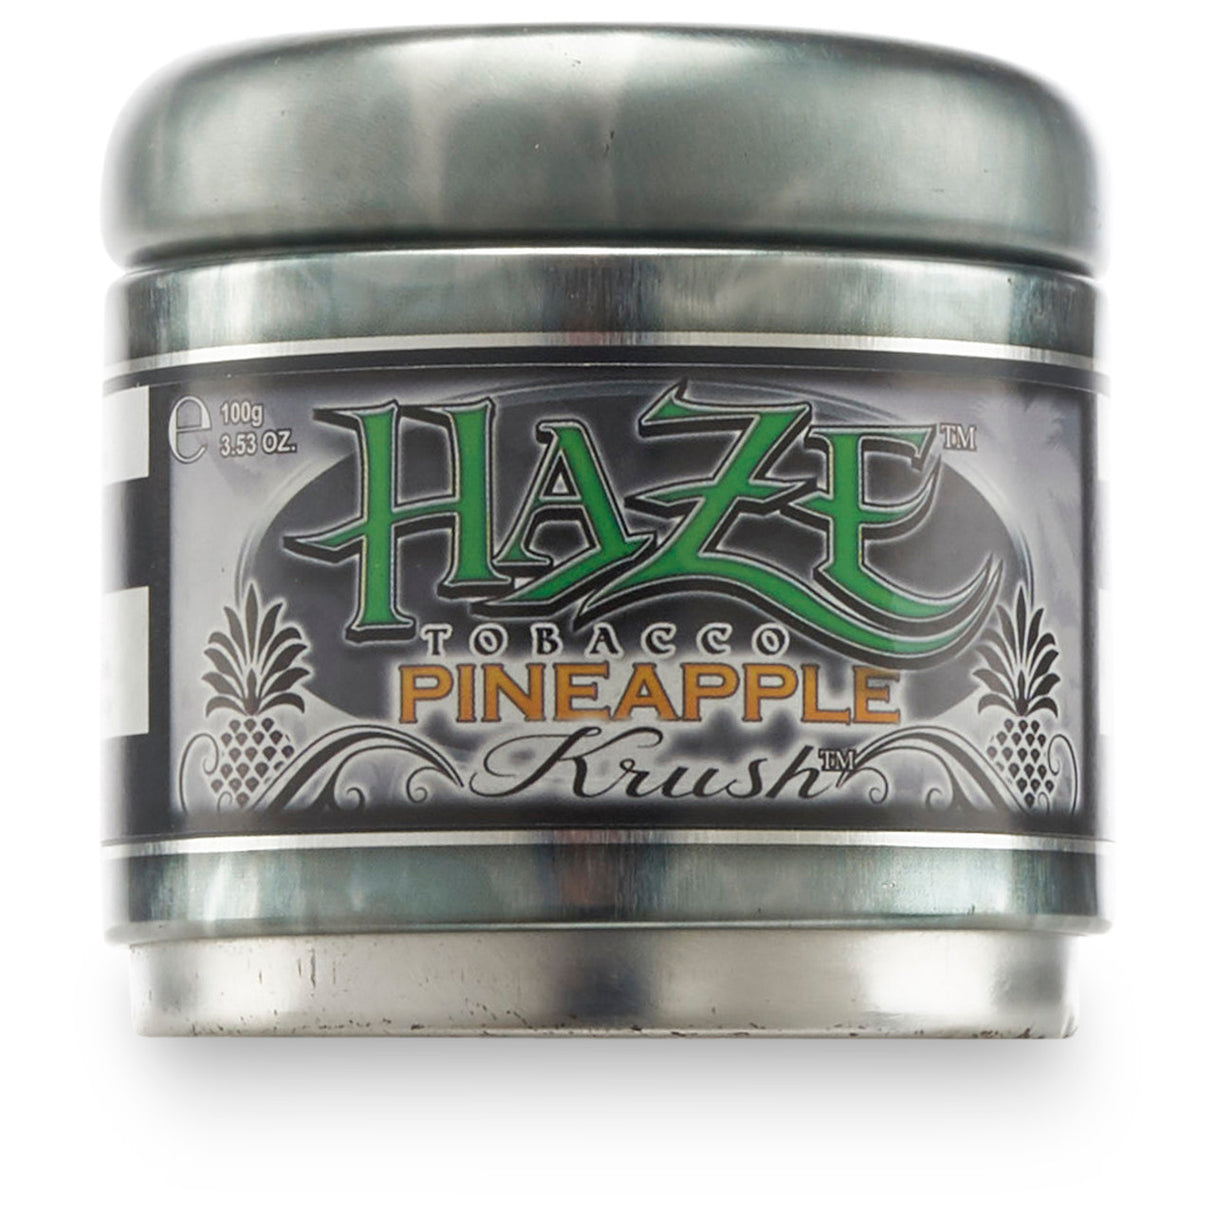 Haze Premium Hookah Tobacco Molasses for Sale